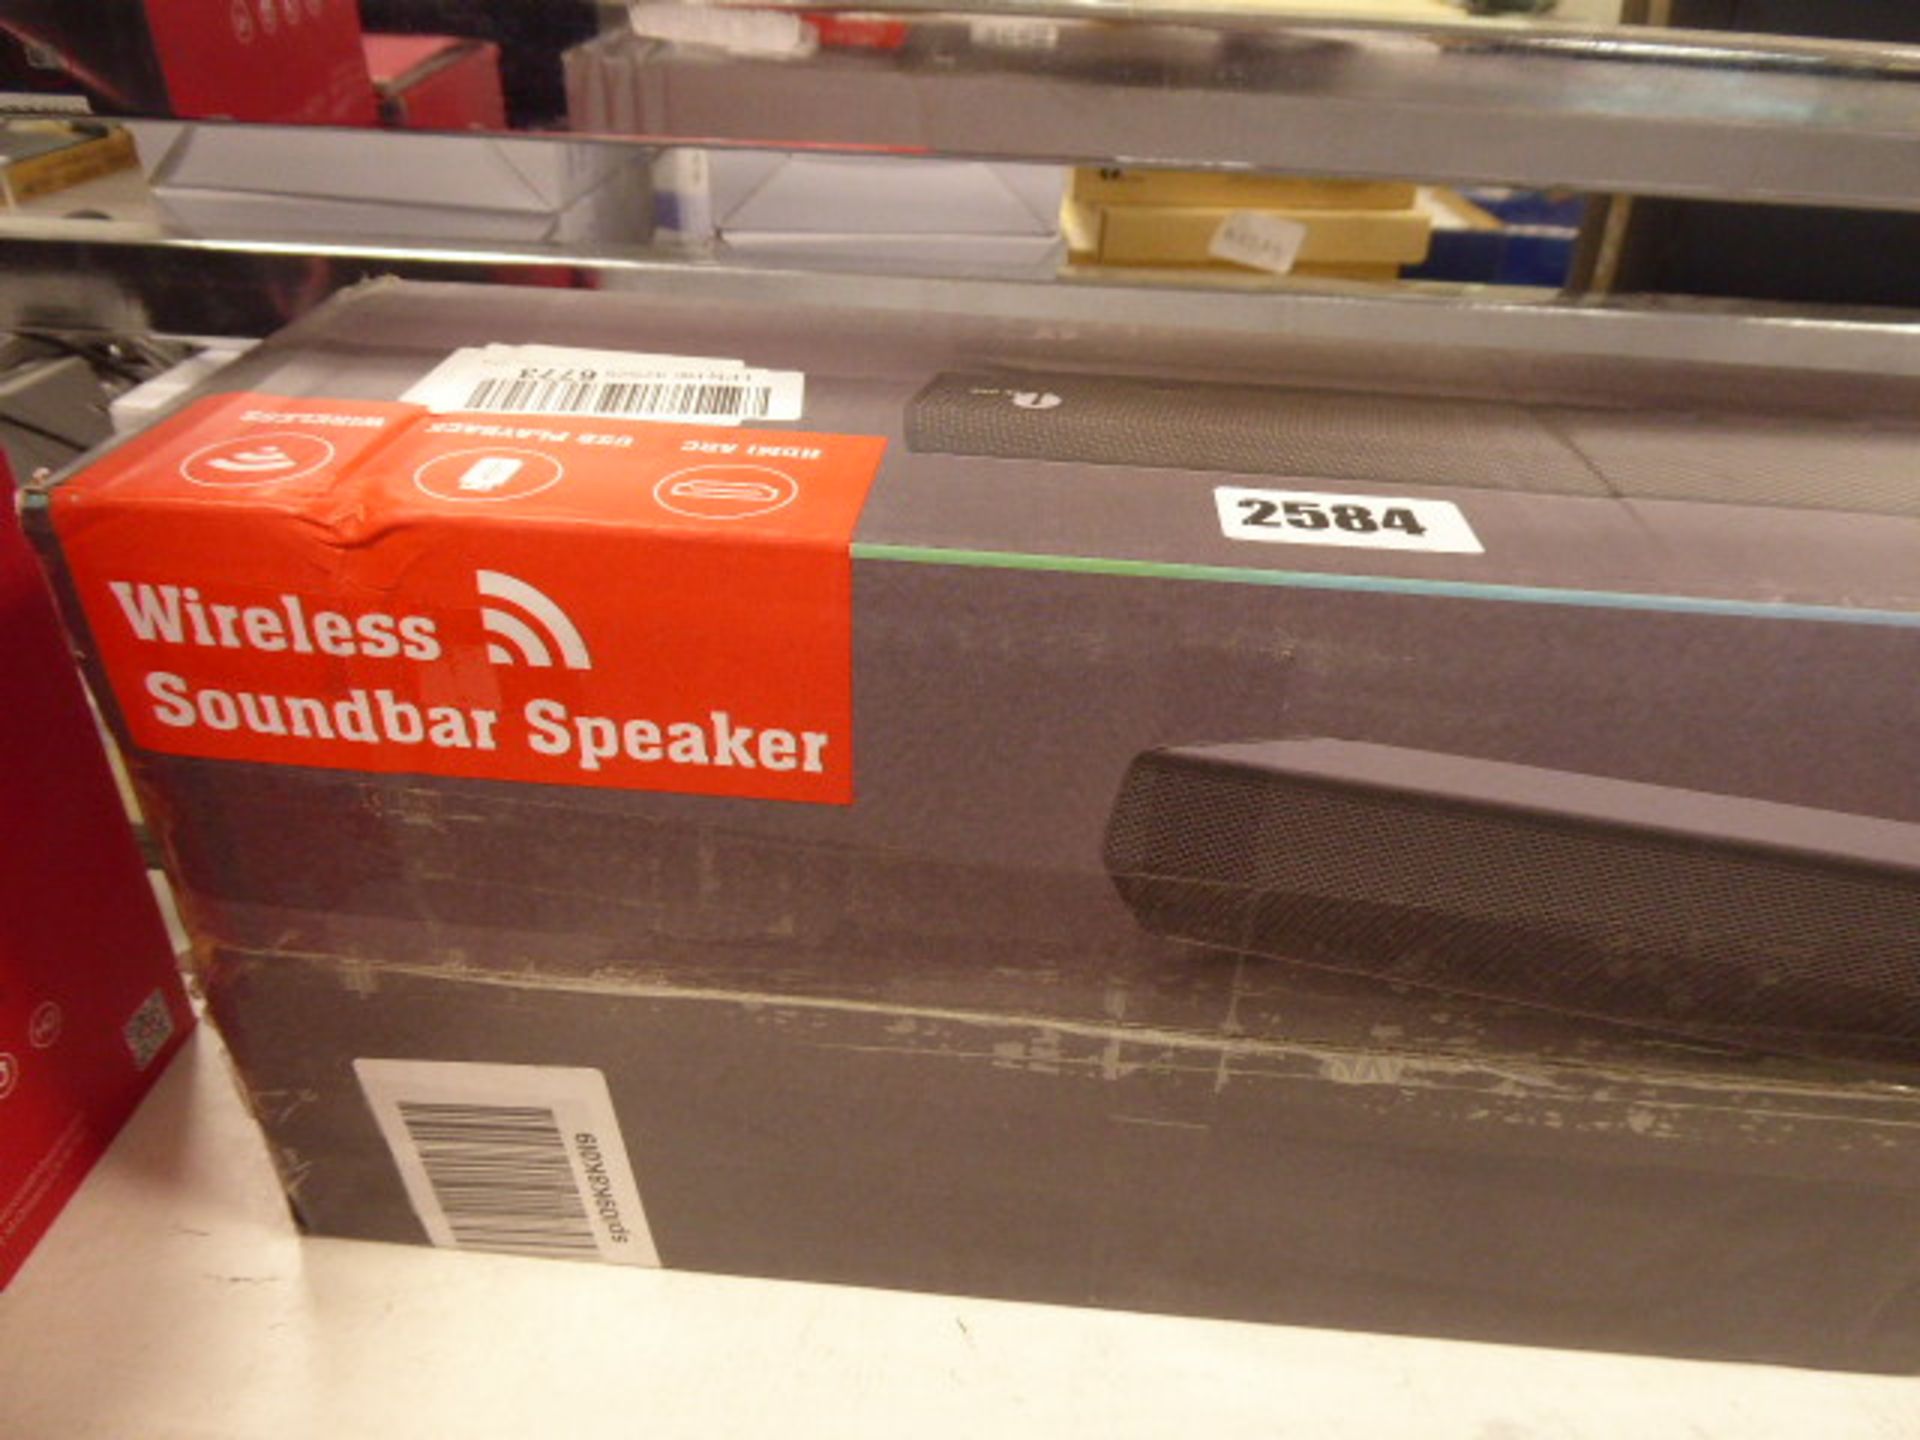 A One by One wireless soundbar speaker in box - Image 2 of 2